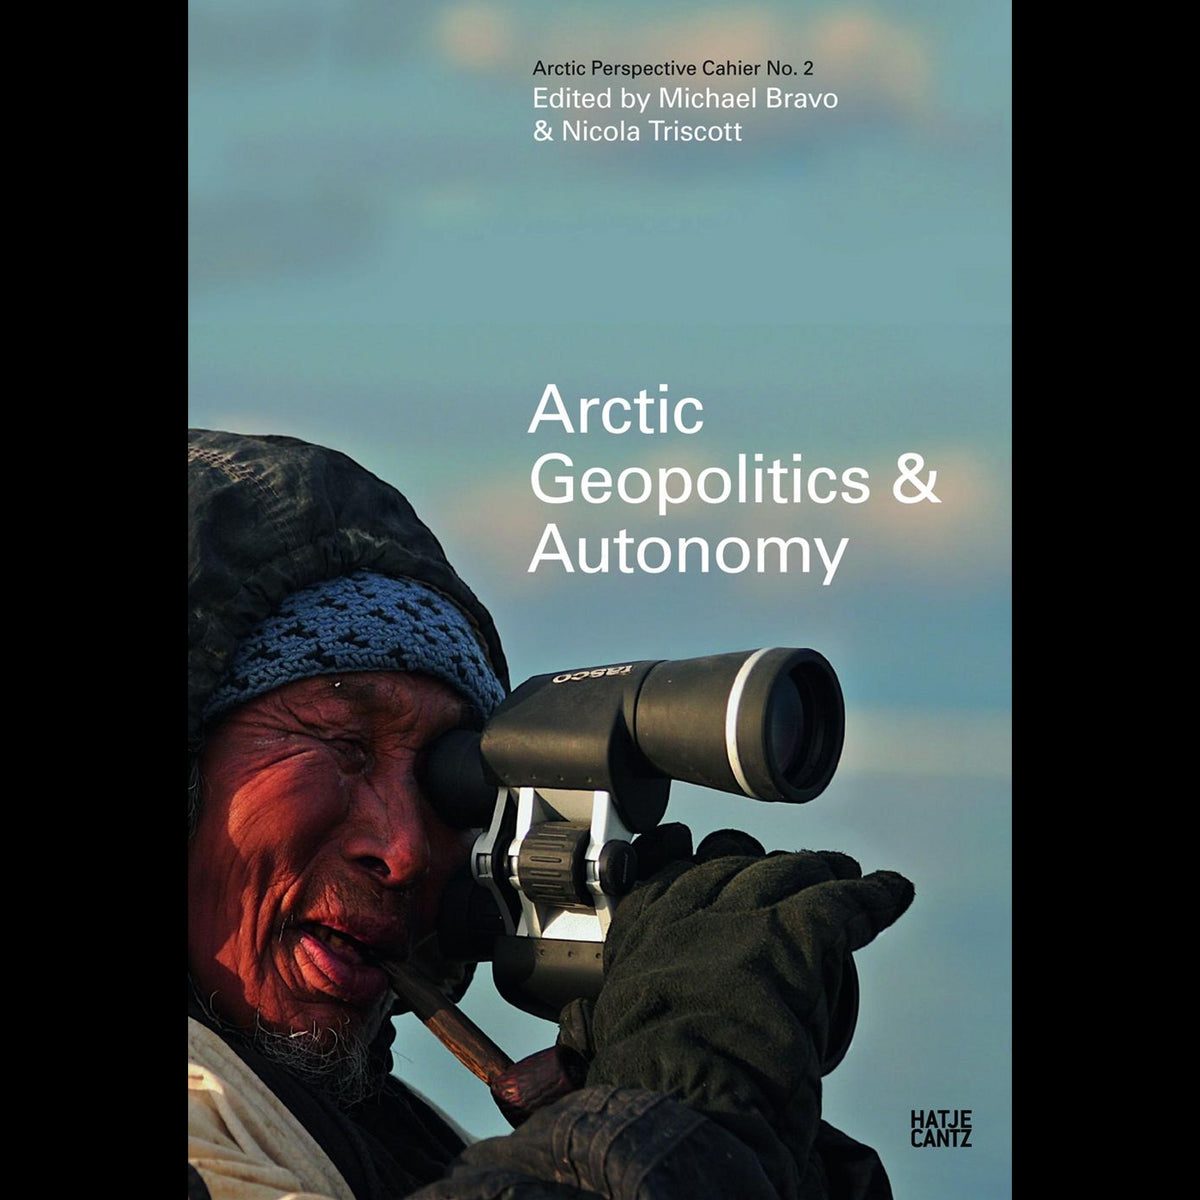 Coverbild Arctic Perspective